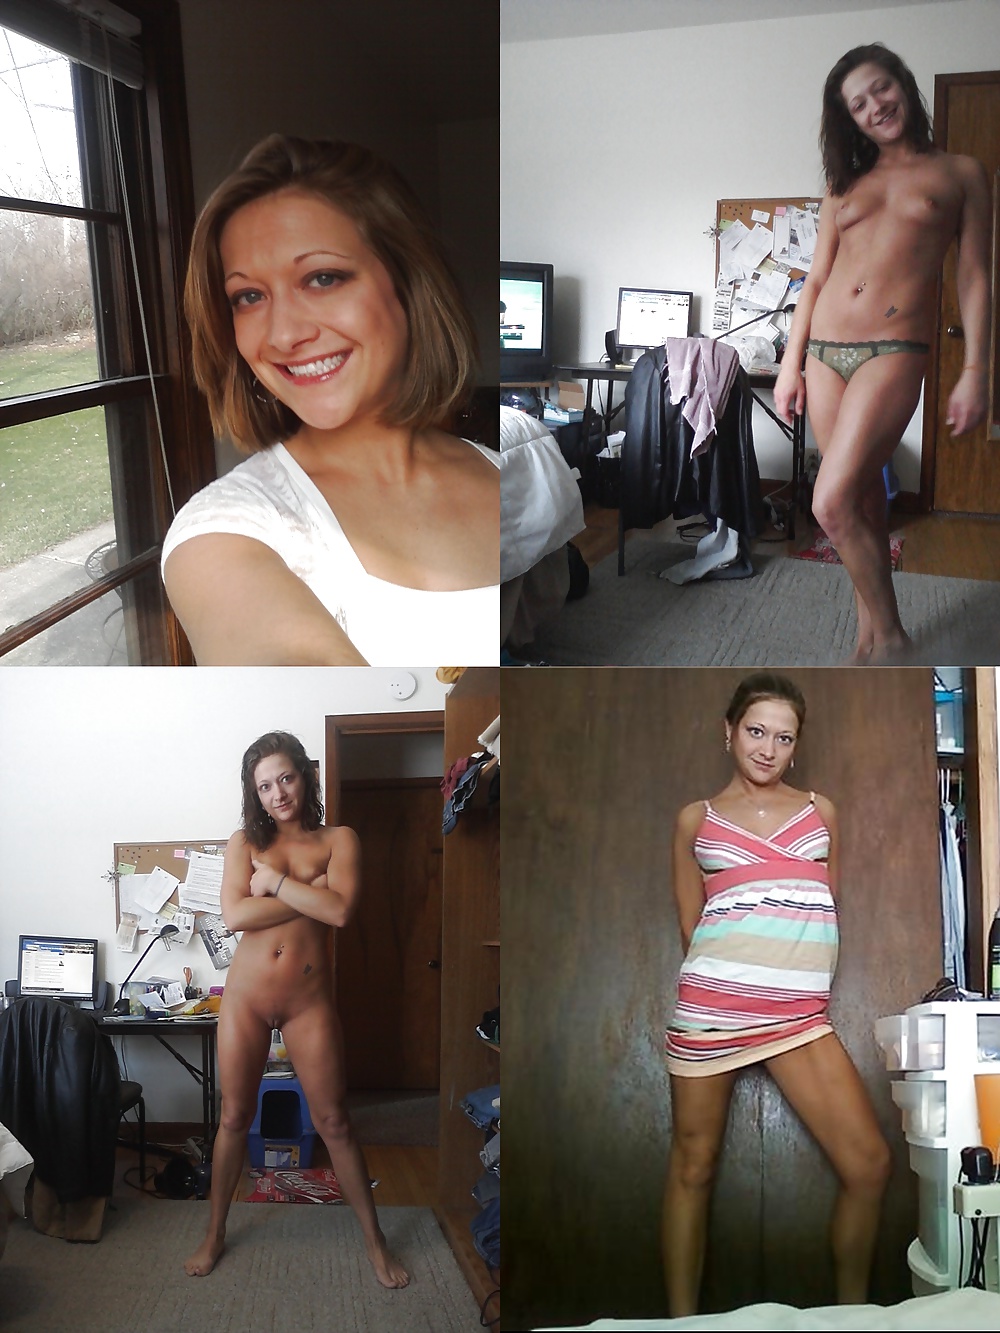 Dressed Undressed Exposed Web Sluts 7 Porn Pictures Xxx Photos Sex Images 1598905 Pictoa